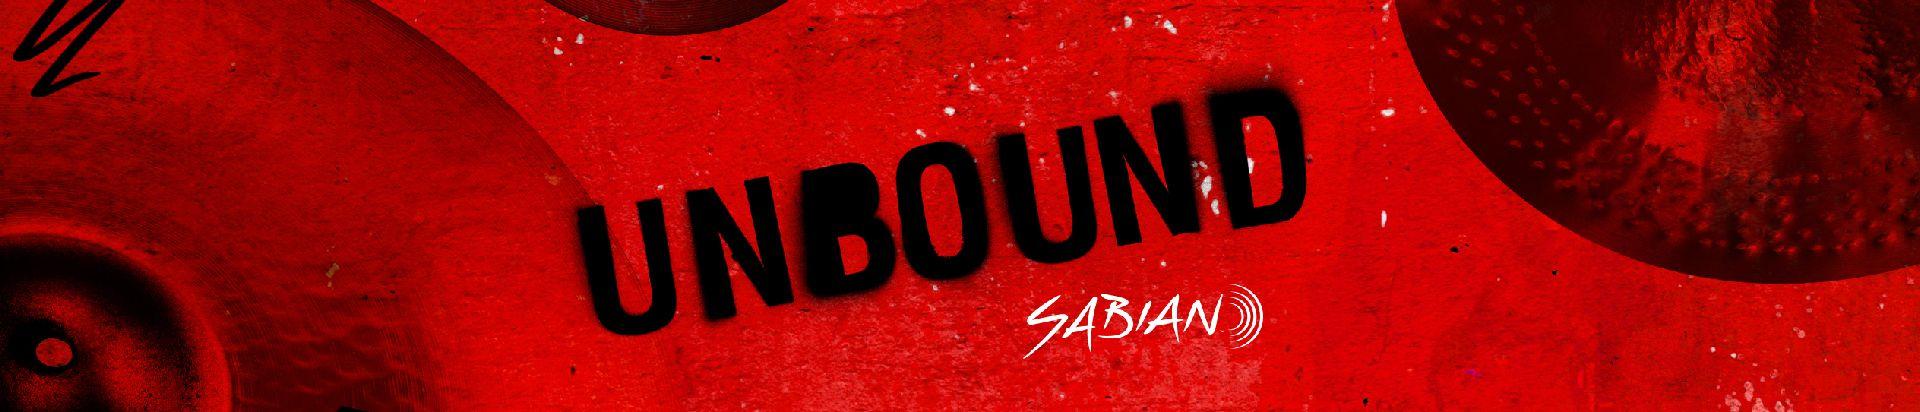 Sabian Logo - SABIAN Announces New Brand at NAMM 2019 | SABIAN Cymbals